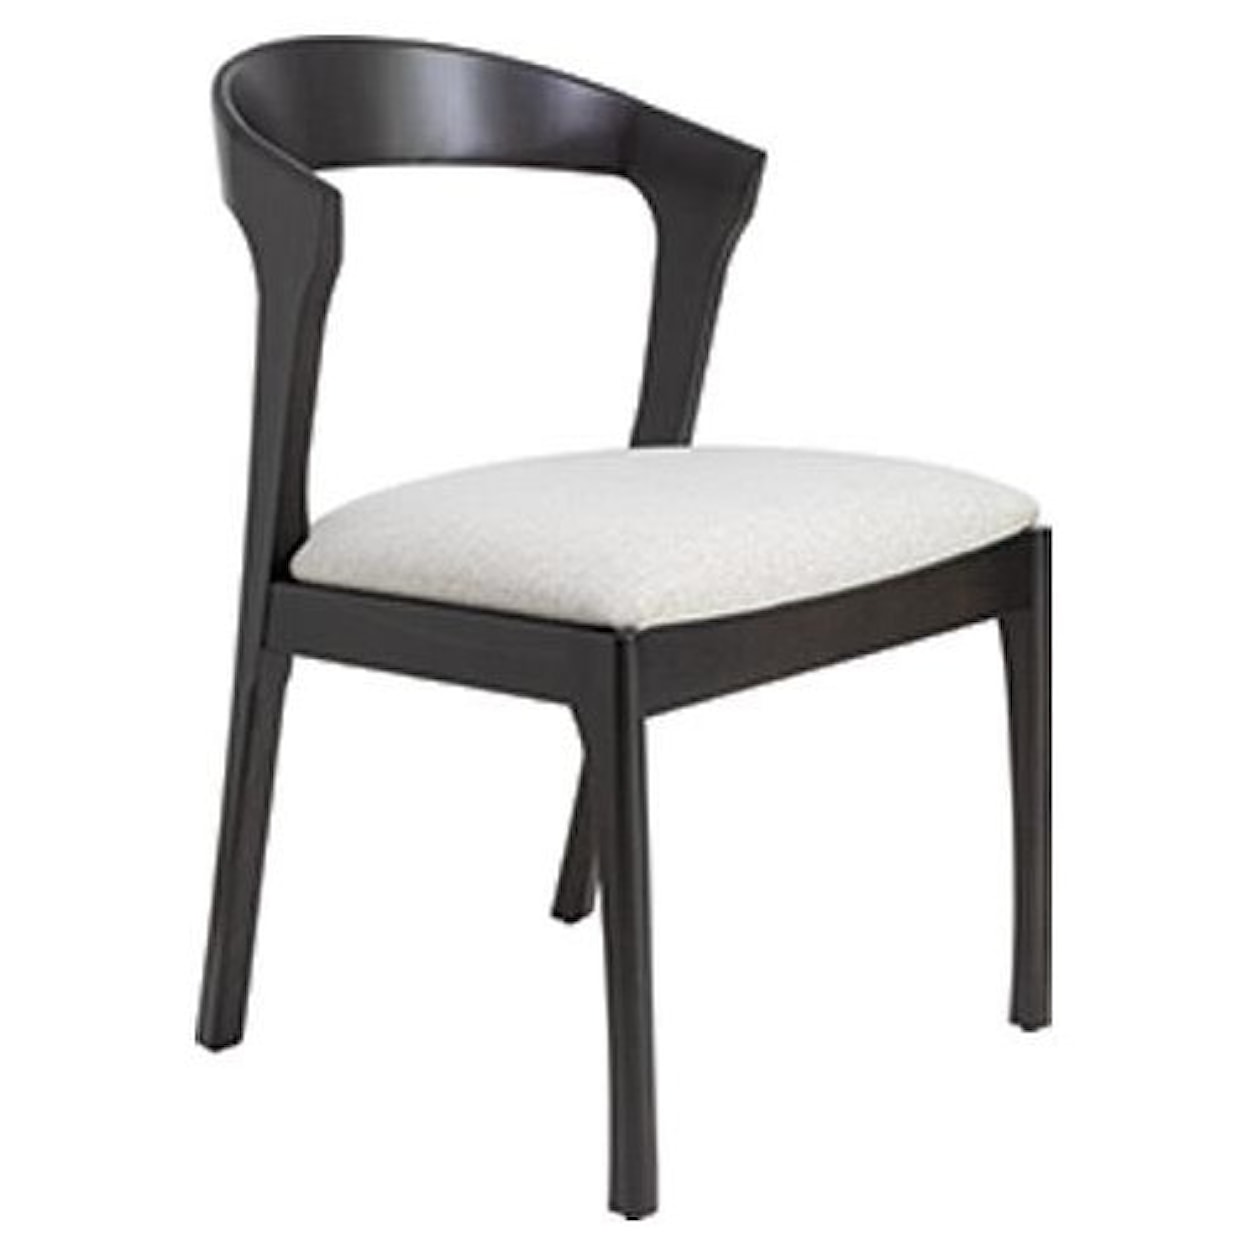 Bermex CB-1115 Chairs